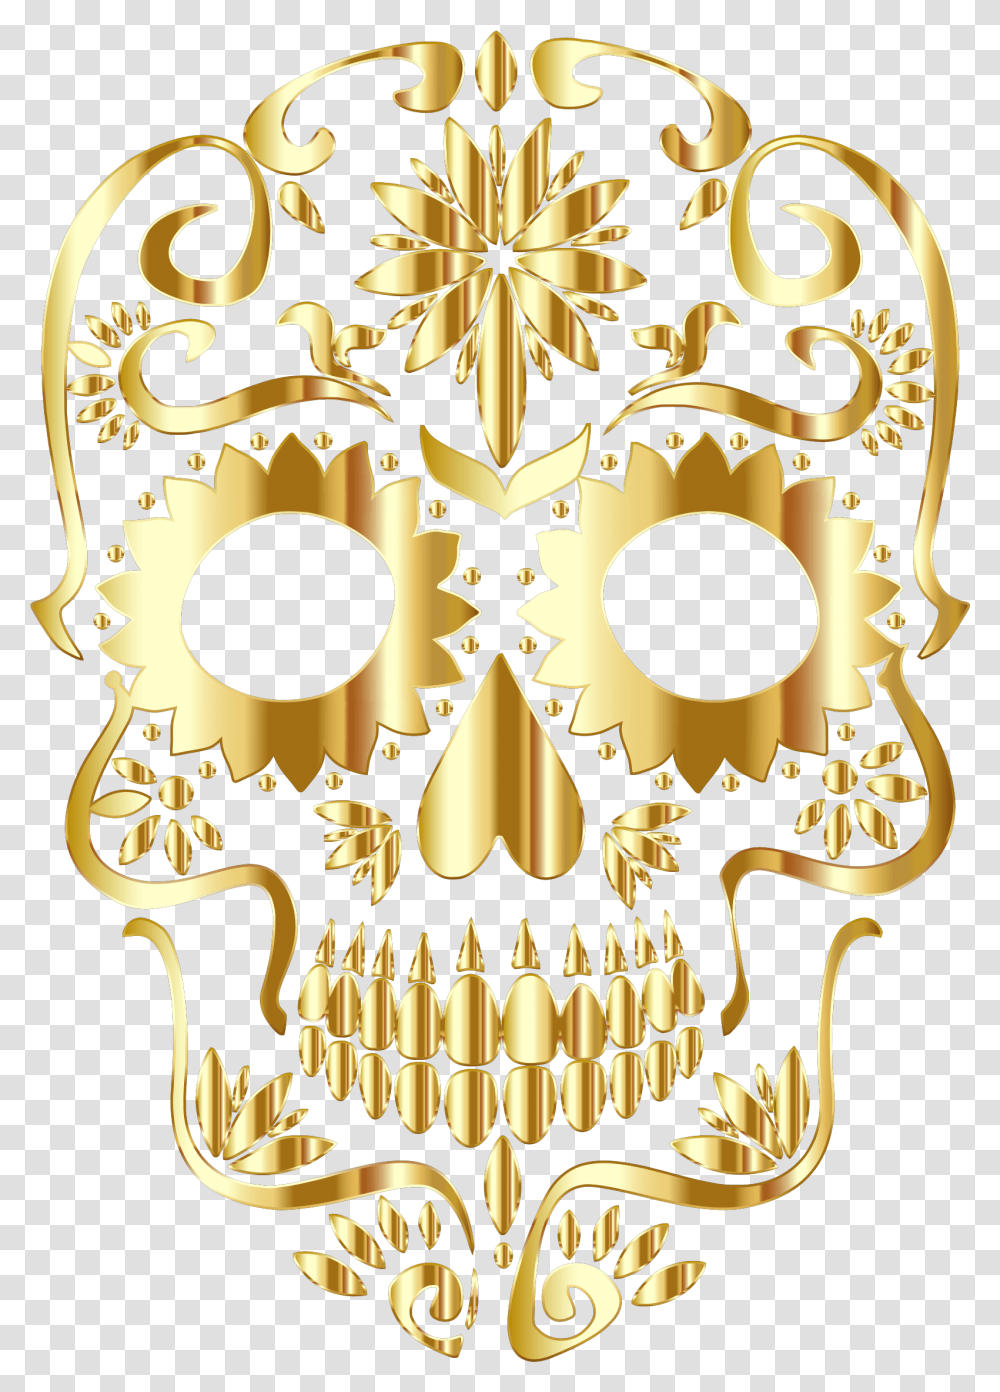 Sugar This Free Icons Design Of Gold Sugar Skull Sugar Skull No Background, Dragon, Symbol, Art, Emblem Transparent Png